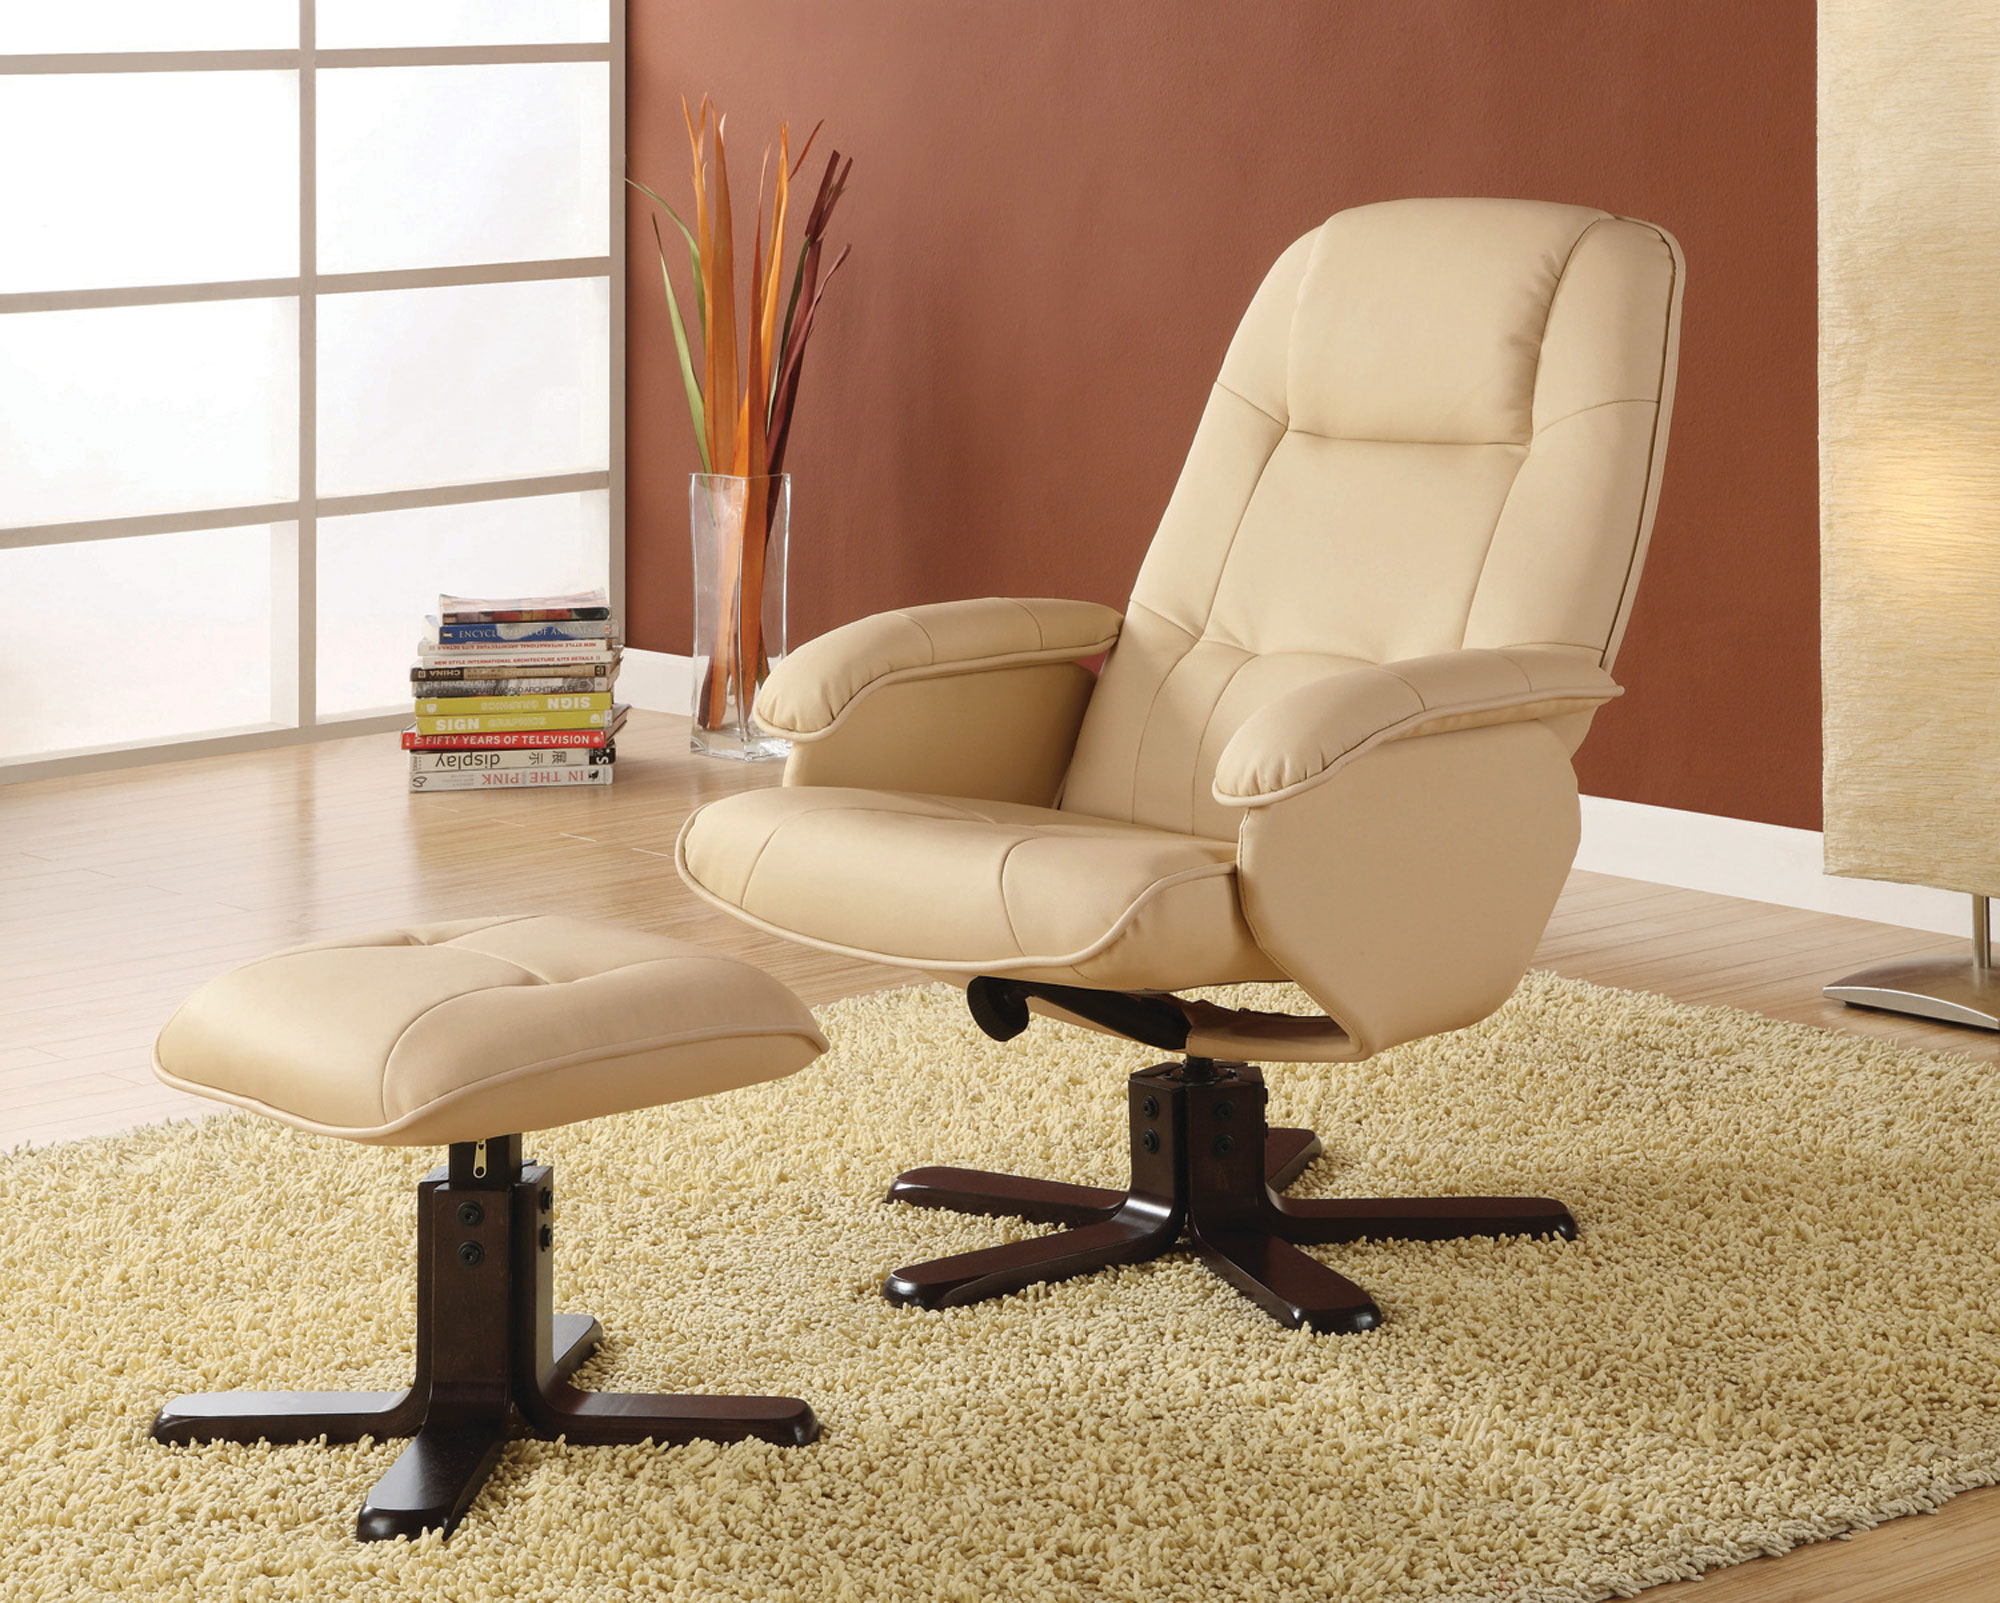 Swivel glider rocker chair with ottoman 1